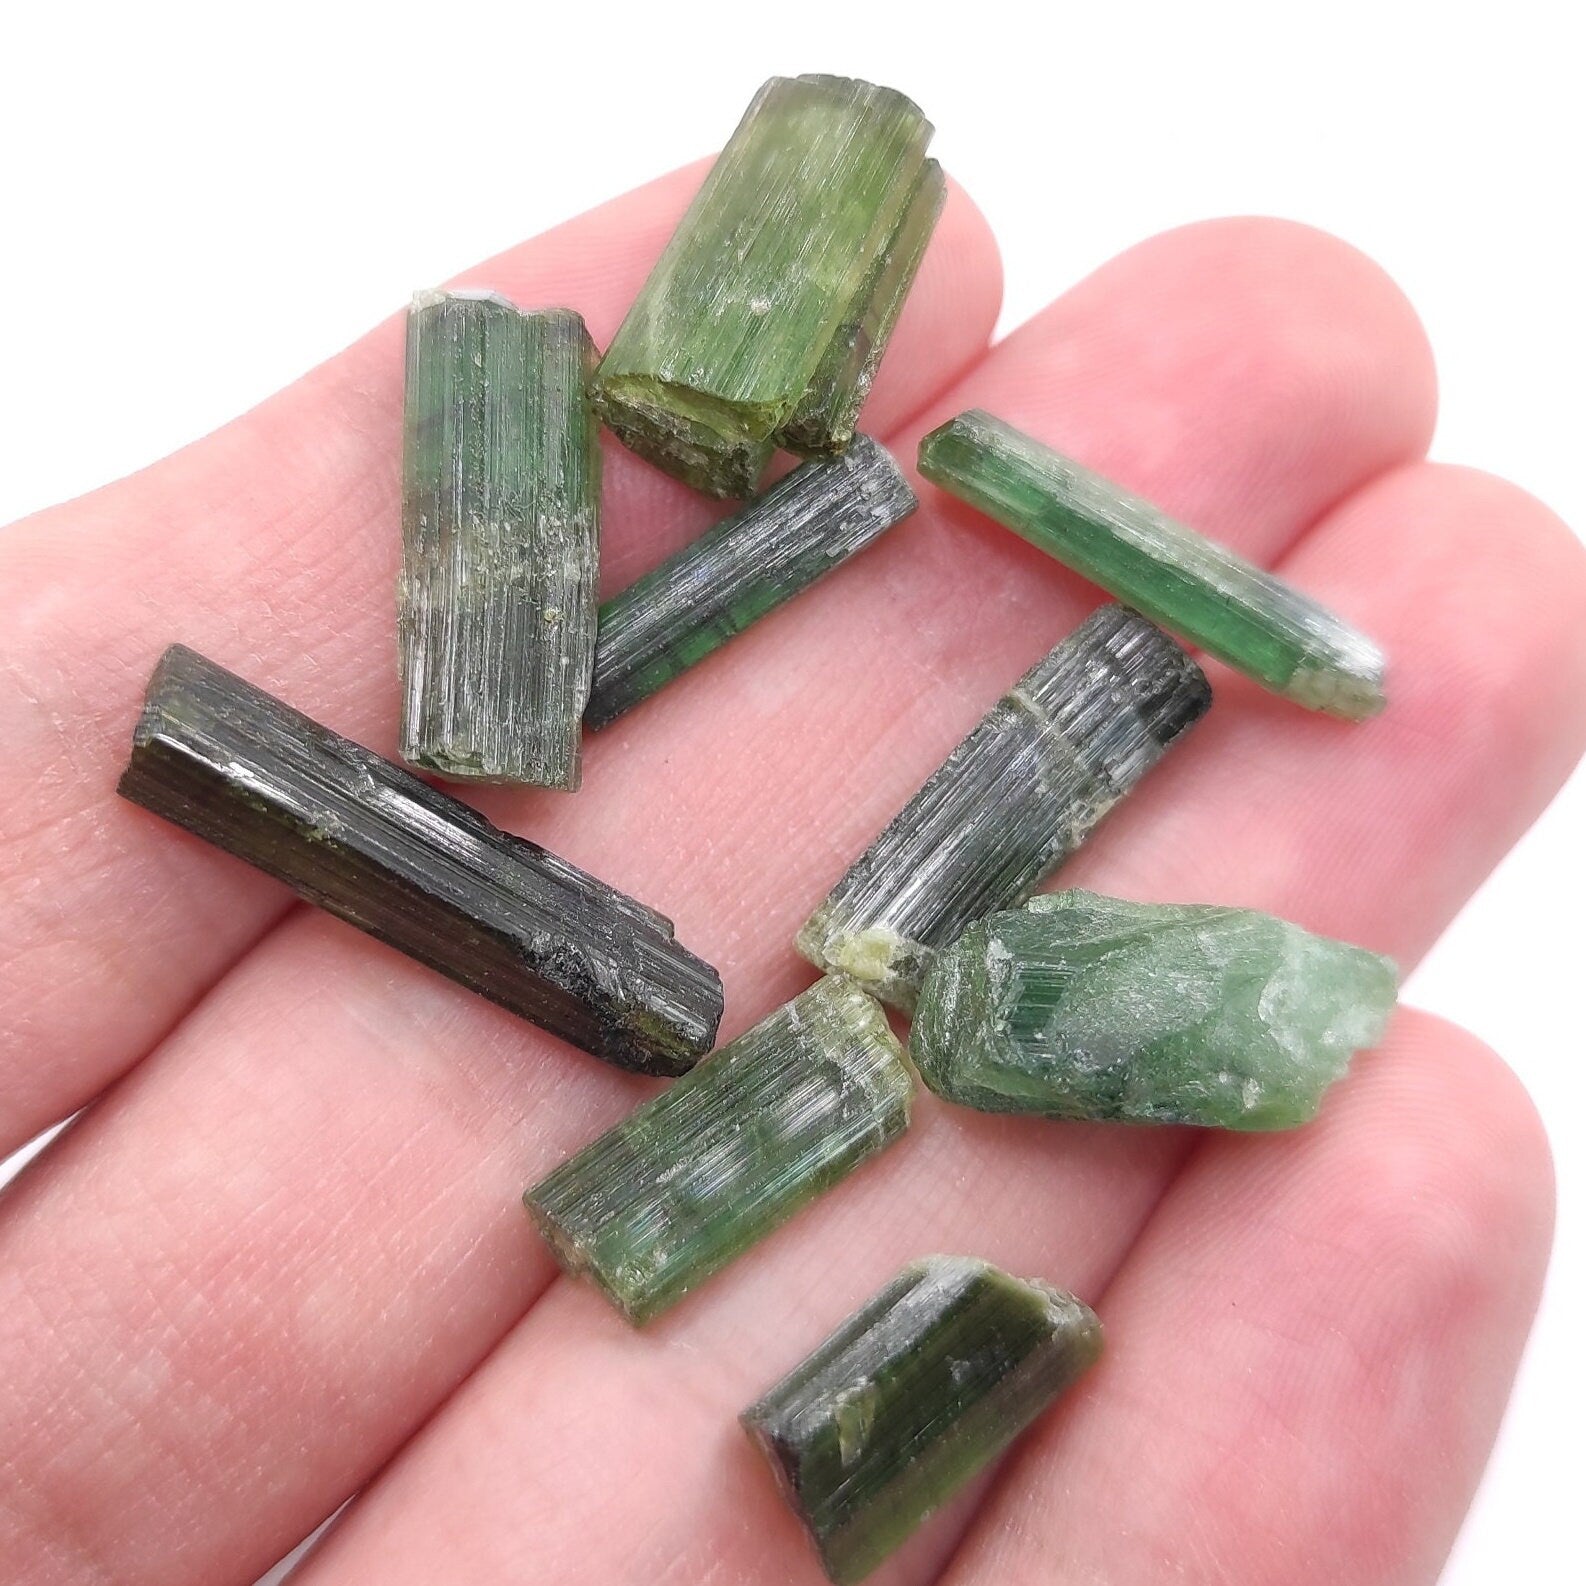 53ct Green Tourmaline Lot - Tourmaline Sticks - Raw Green Tourmaline Crystals - Loose Gemstones - Rough Tourmalines Gemstones - Afghanistan